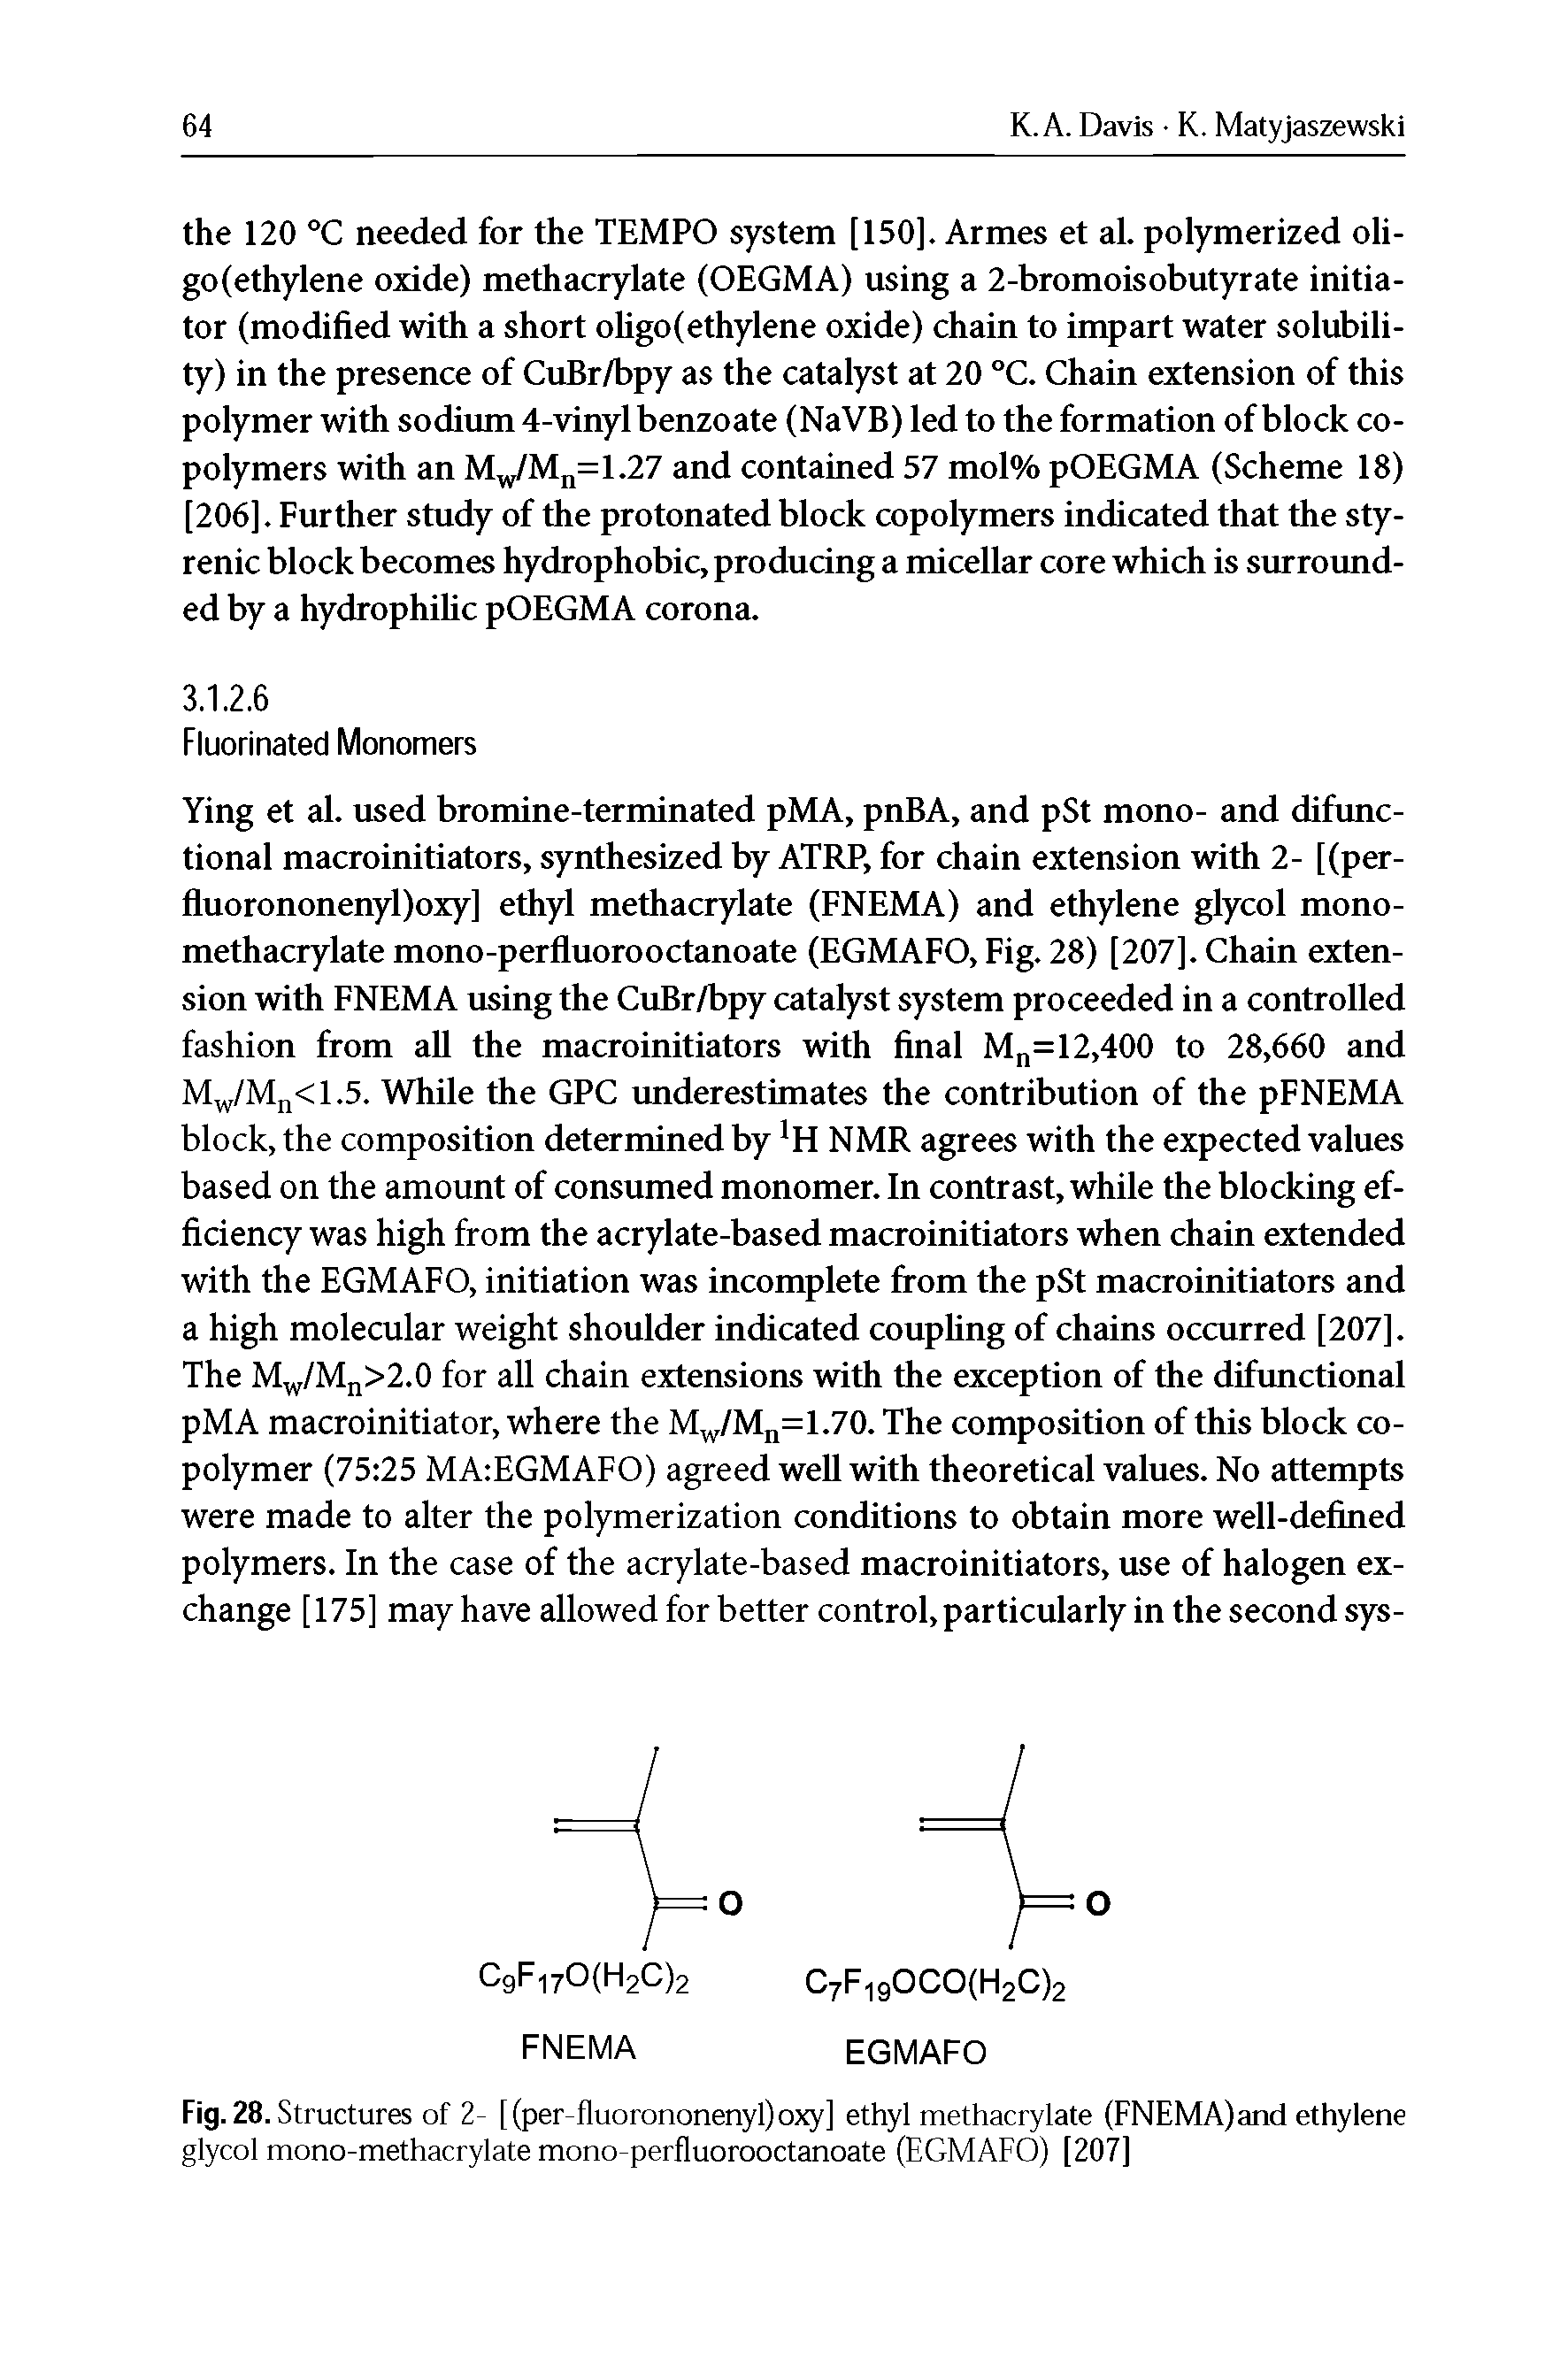 Fig. 28. Structures of 2- [(per-fluorononenyl)oxy] ethyl methacrylate (FNEMA)and ethylene glycol mono-methacrylate mono-perfluorooctanoate (EGMAFO) [207]...